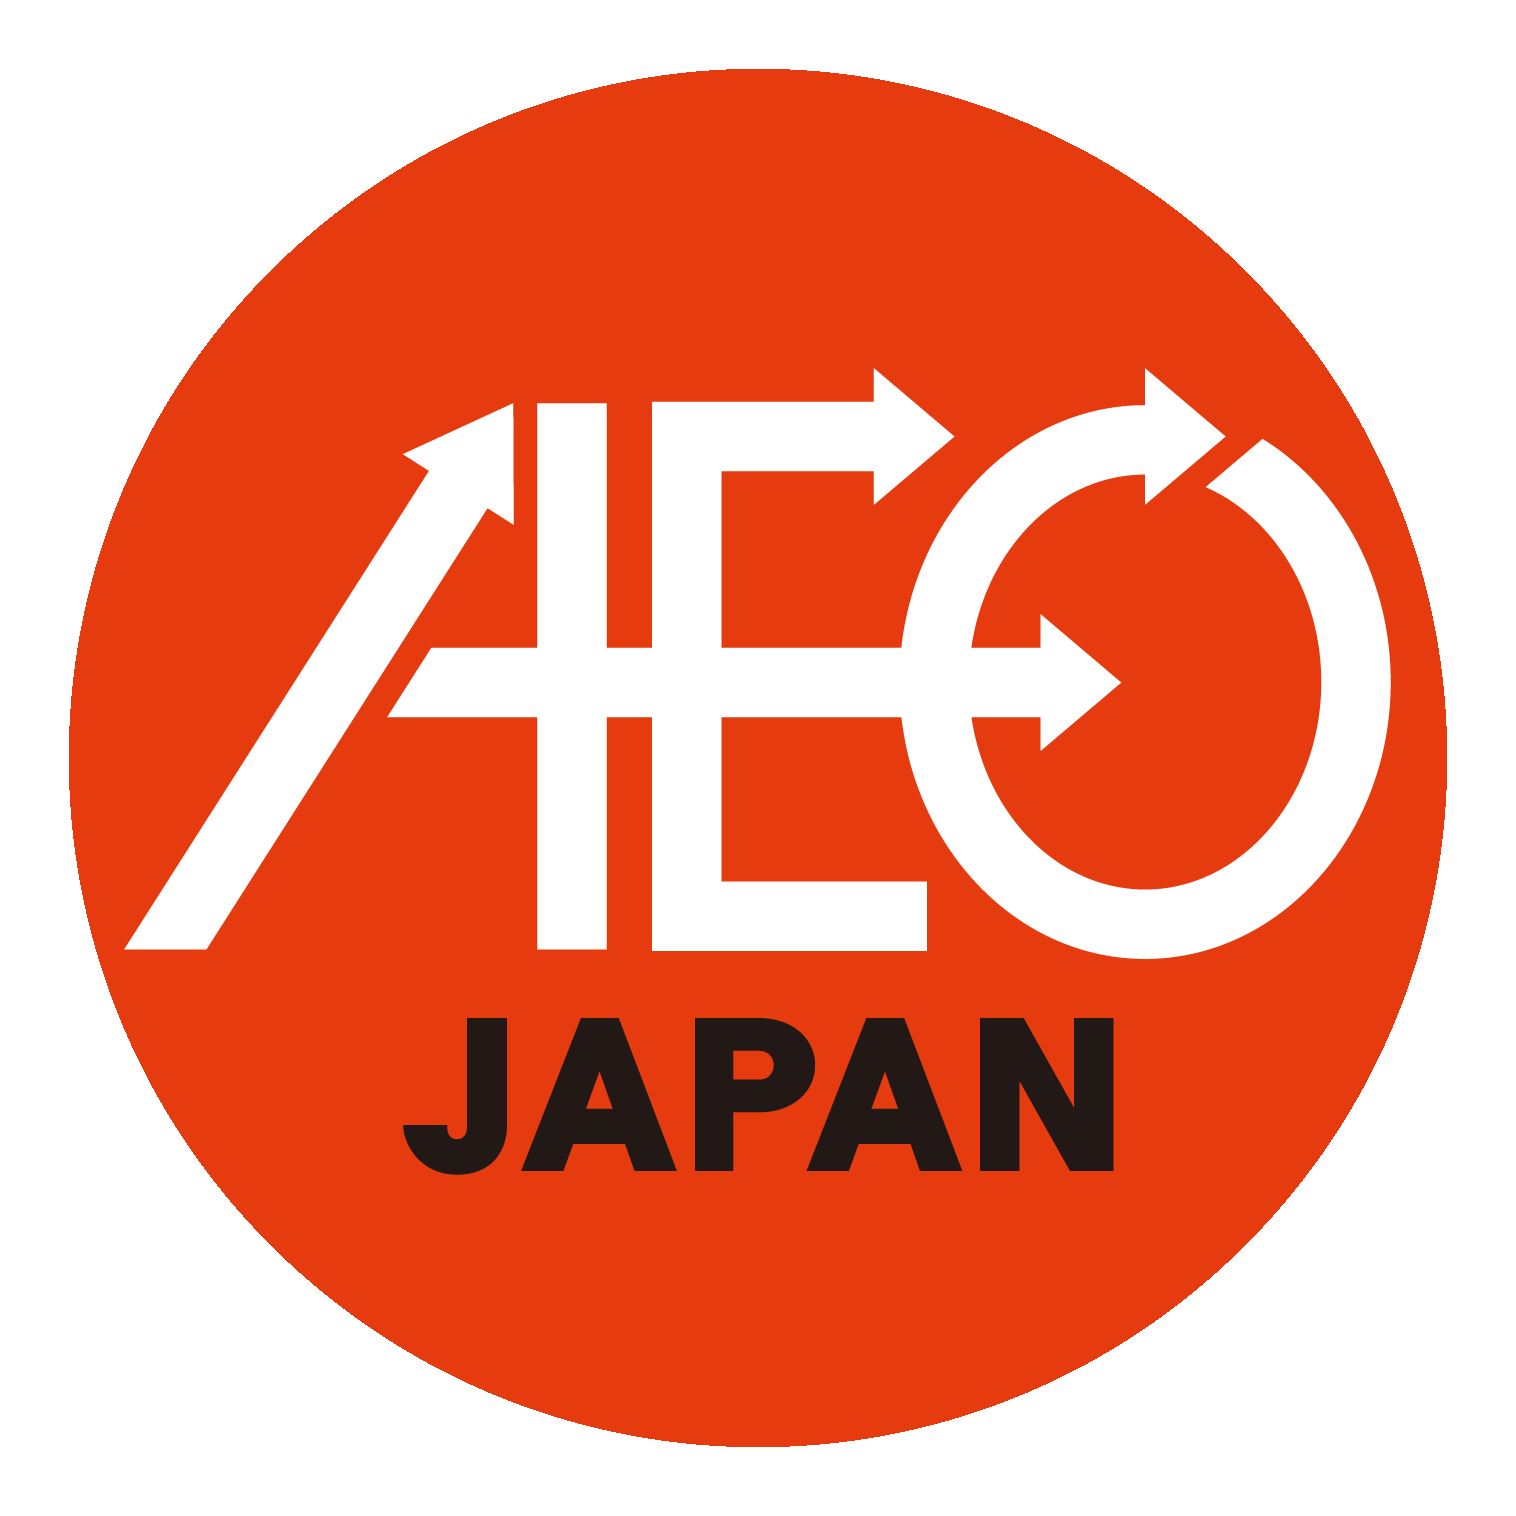 AEO-Logo